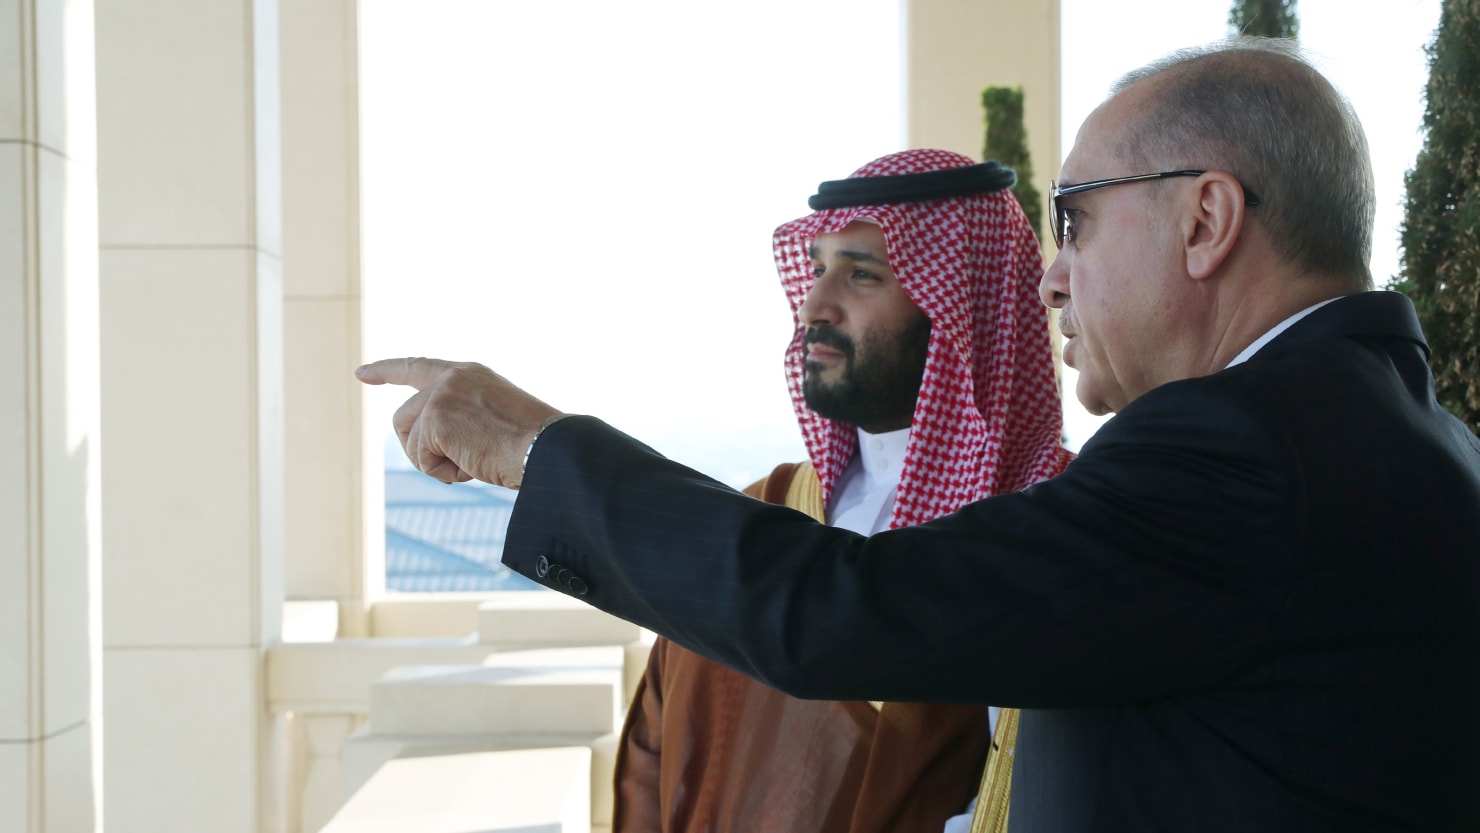 Saudi Prince Mohammed bin Salman visits Tayyip Erdogan turkeys and fixes Jamal Khashoggi flaw